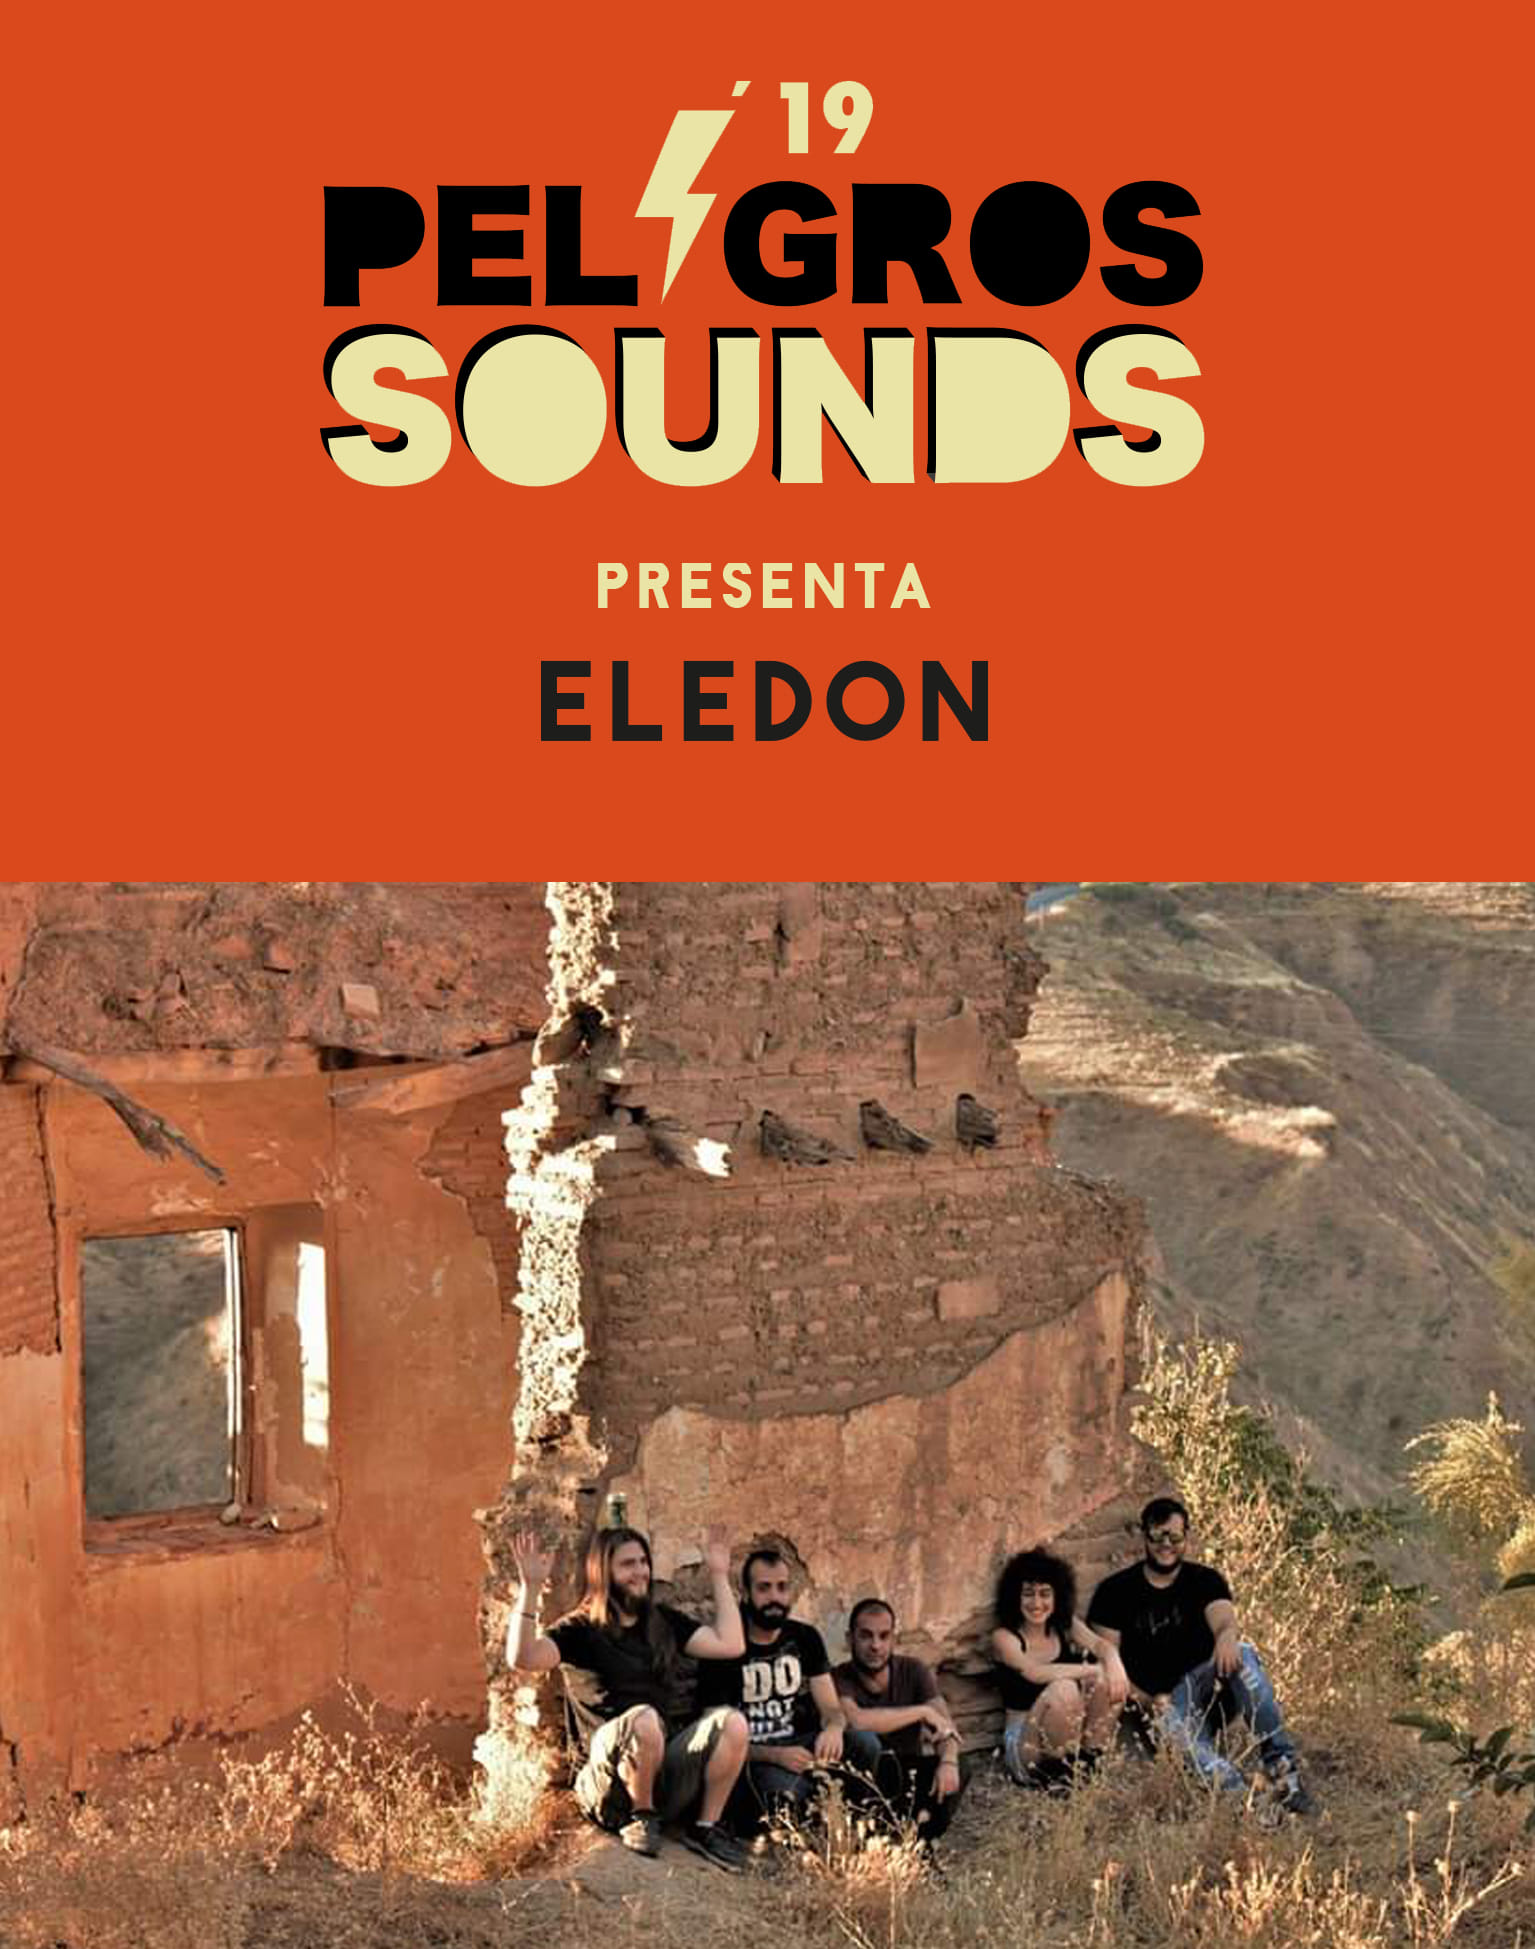 2019- Eledon en el festival peligros sounds